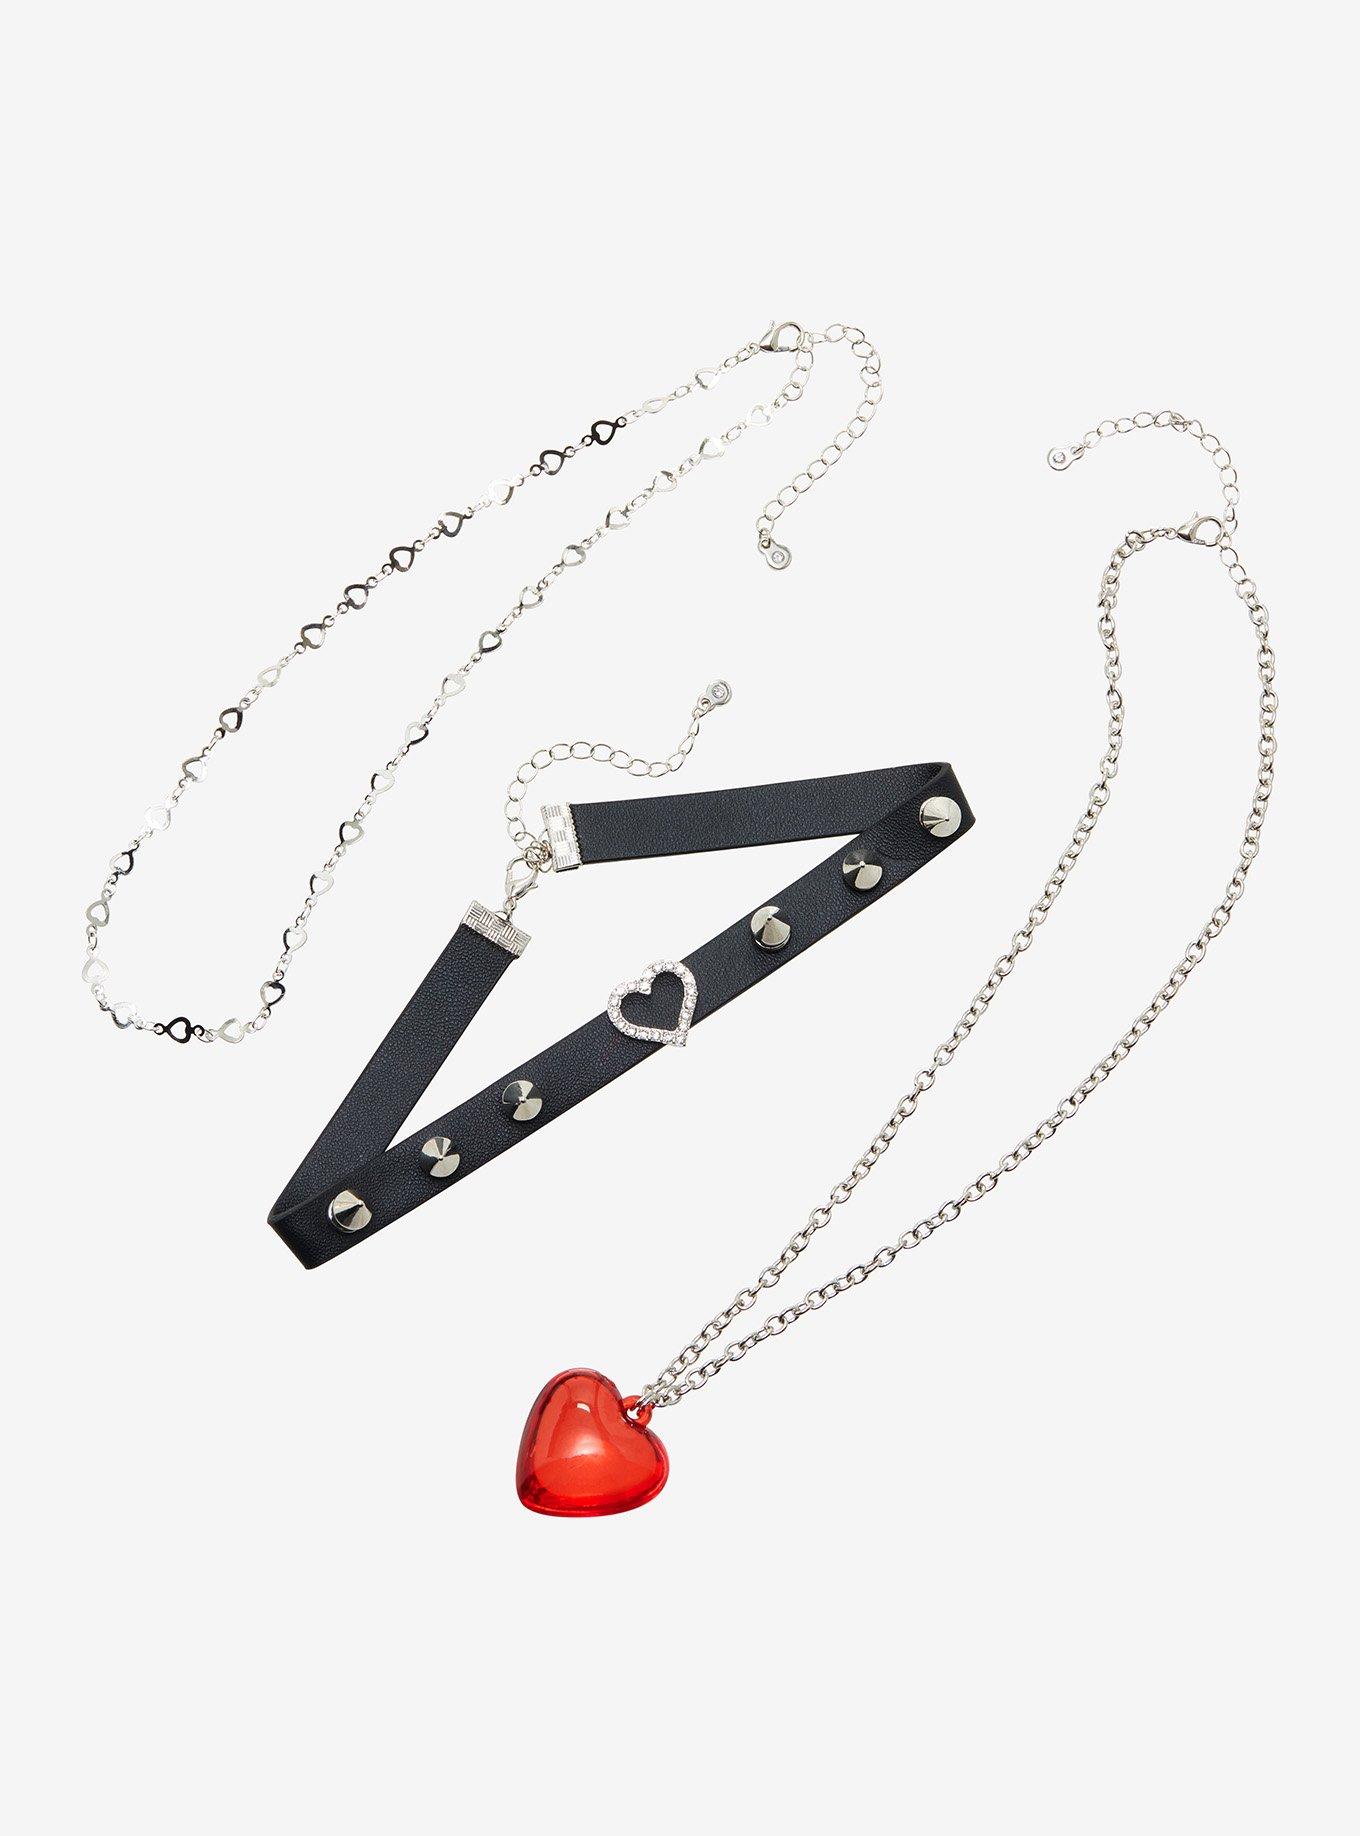 Layered Choker Black Heart Pendant Choker Necklace Halloween Goth